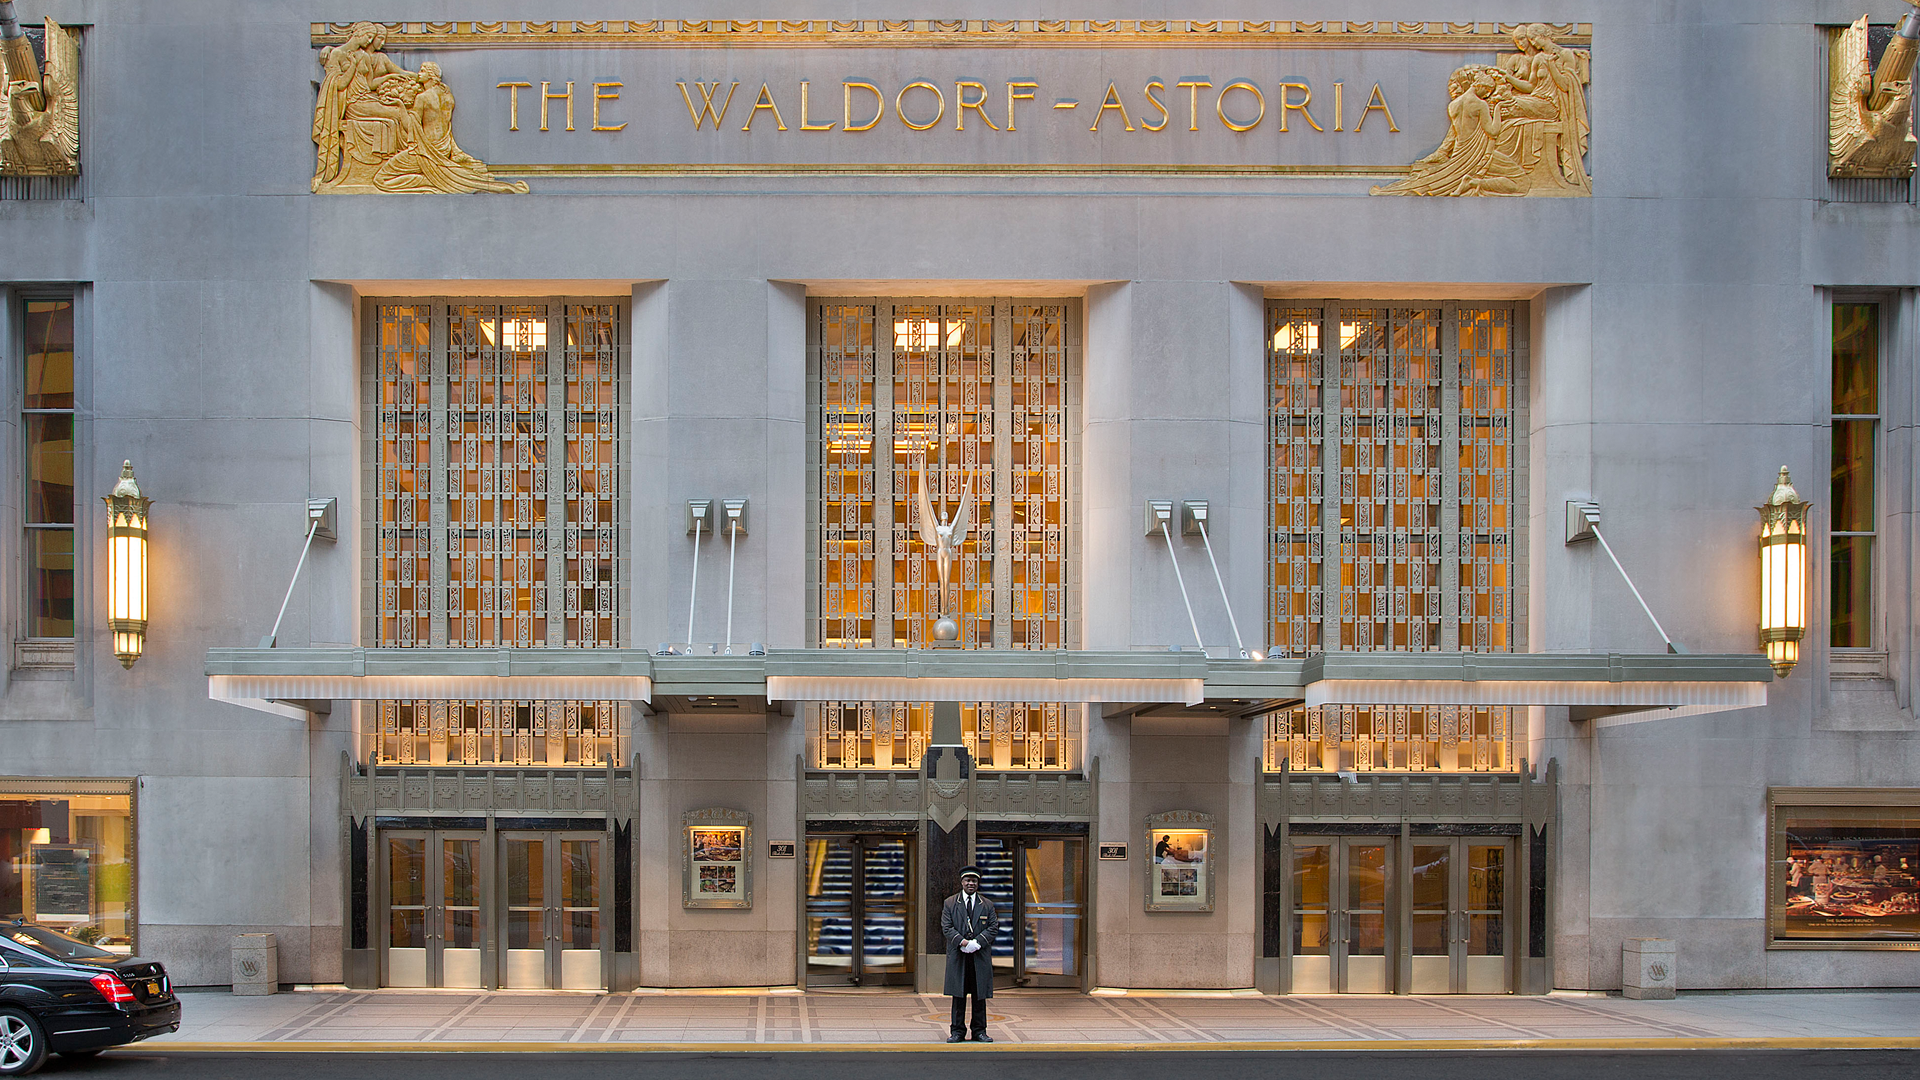 Meet me at the Waldorf